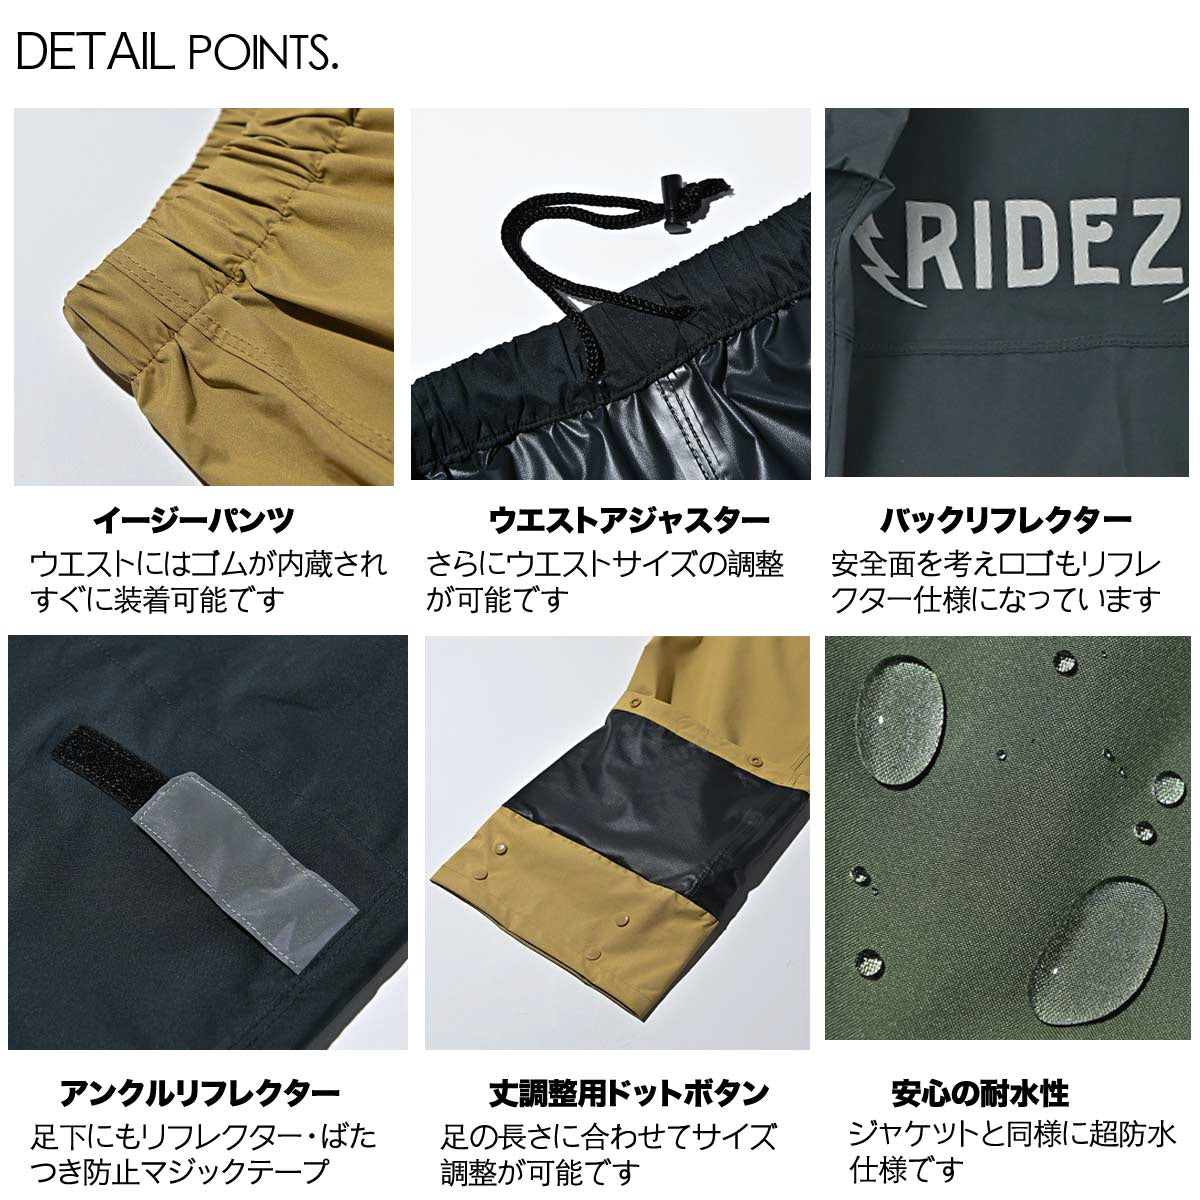 RIDEZ 摩托车雨裤 MICRO RAINPANTS CHECK MCR04 